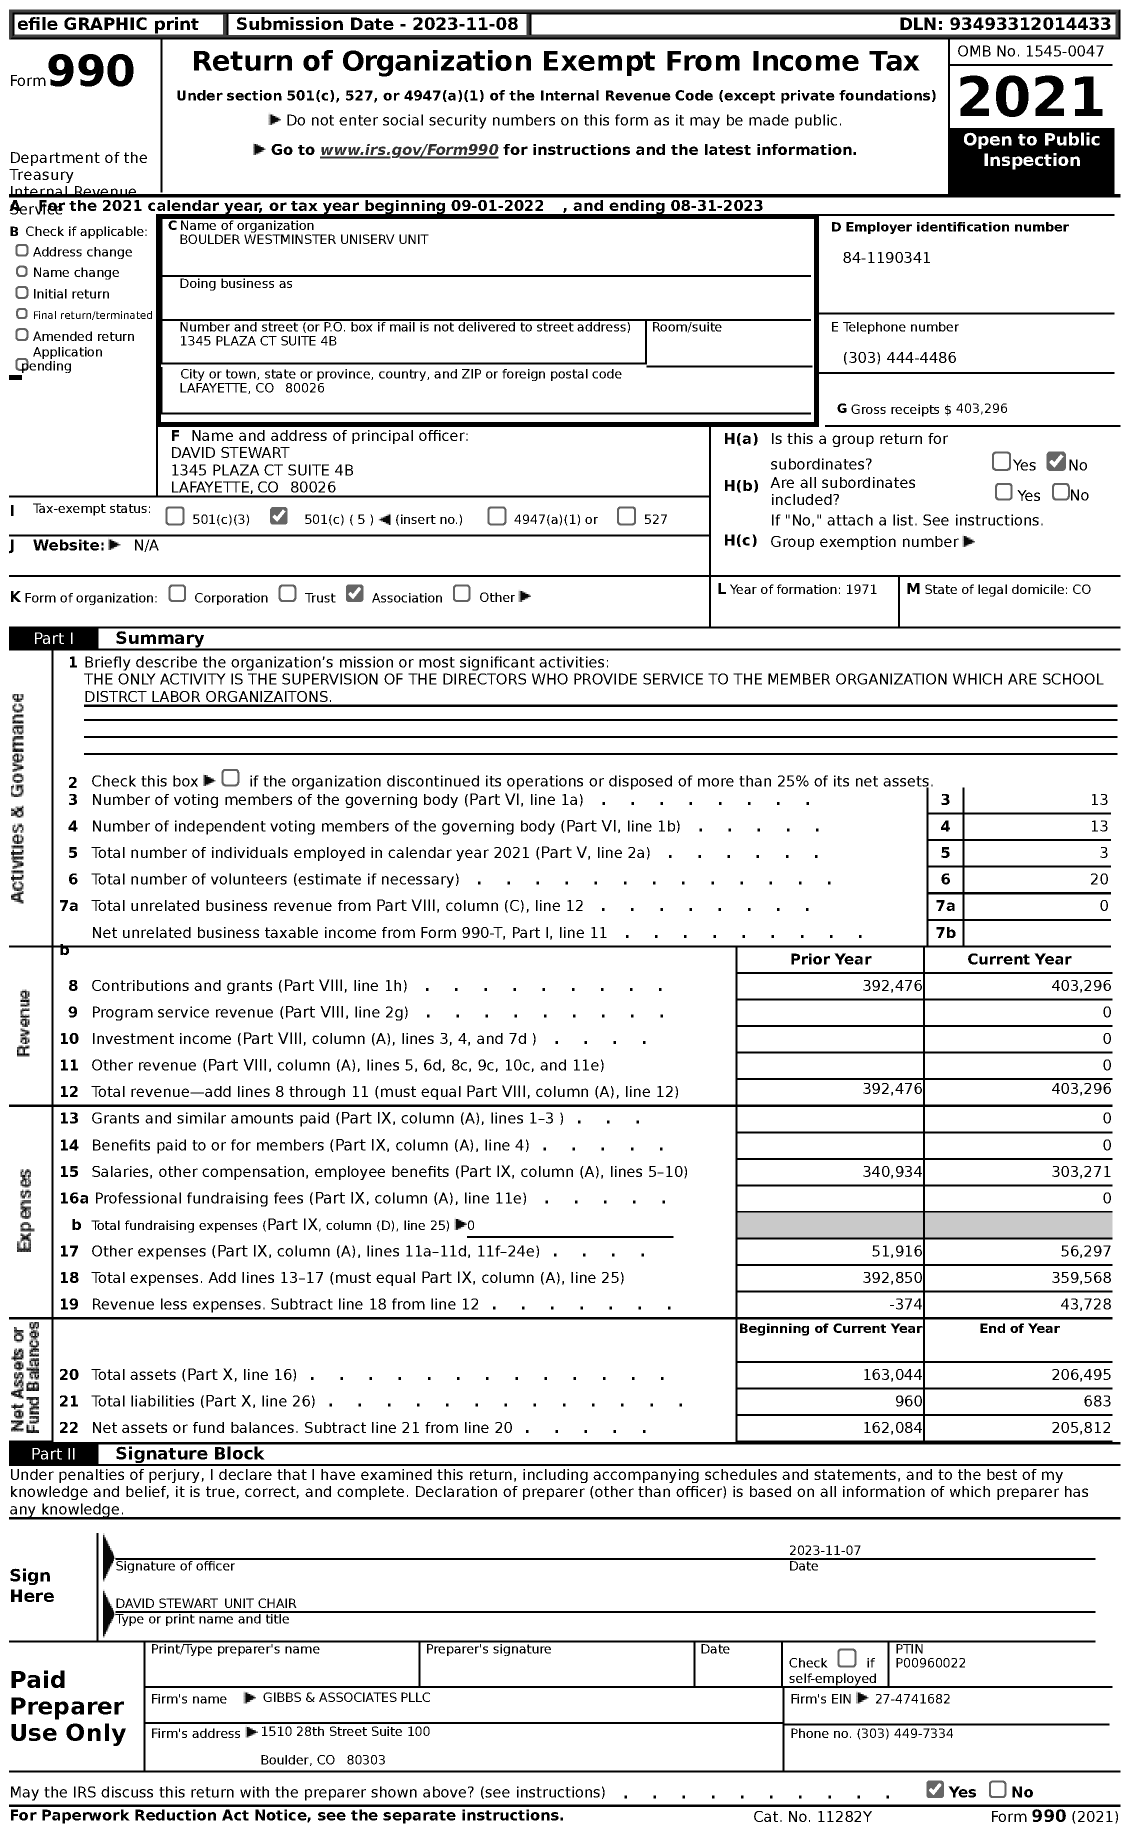 Image of first page of 2022 Form 990 for Boulder Westminster Uniserv Unit